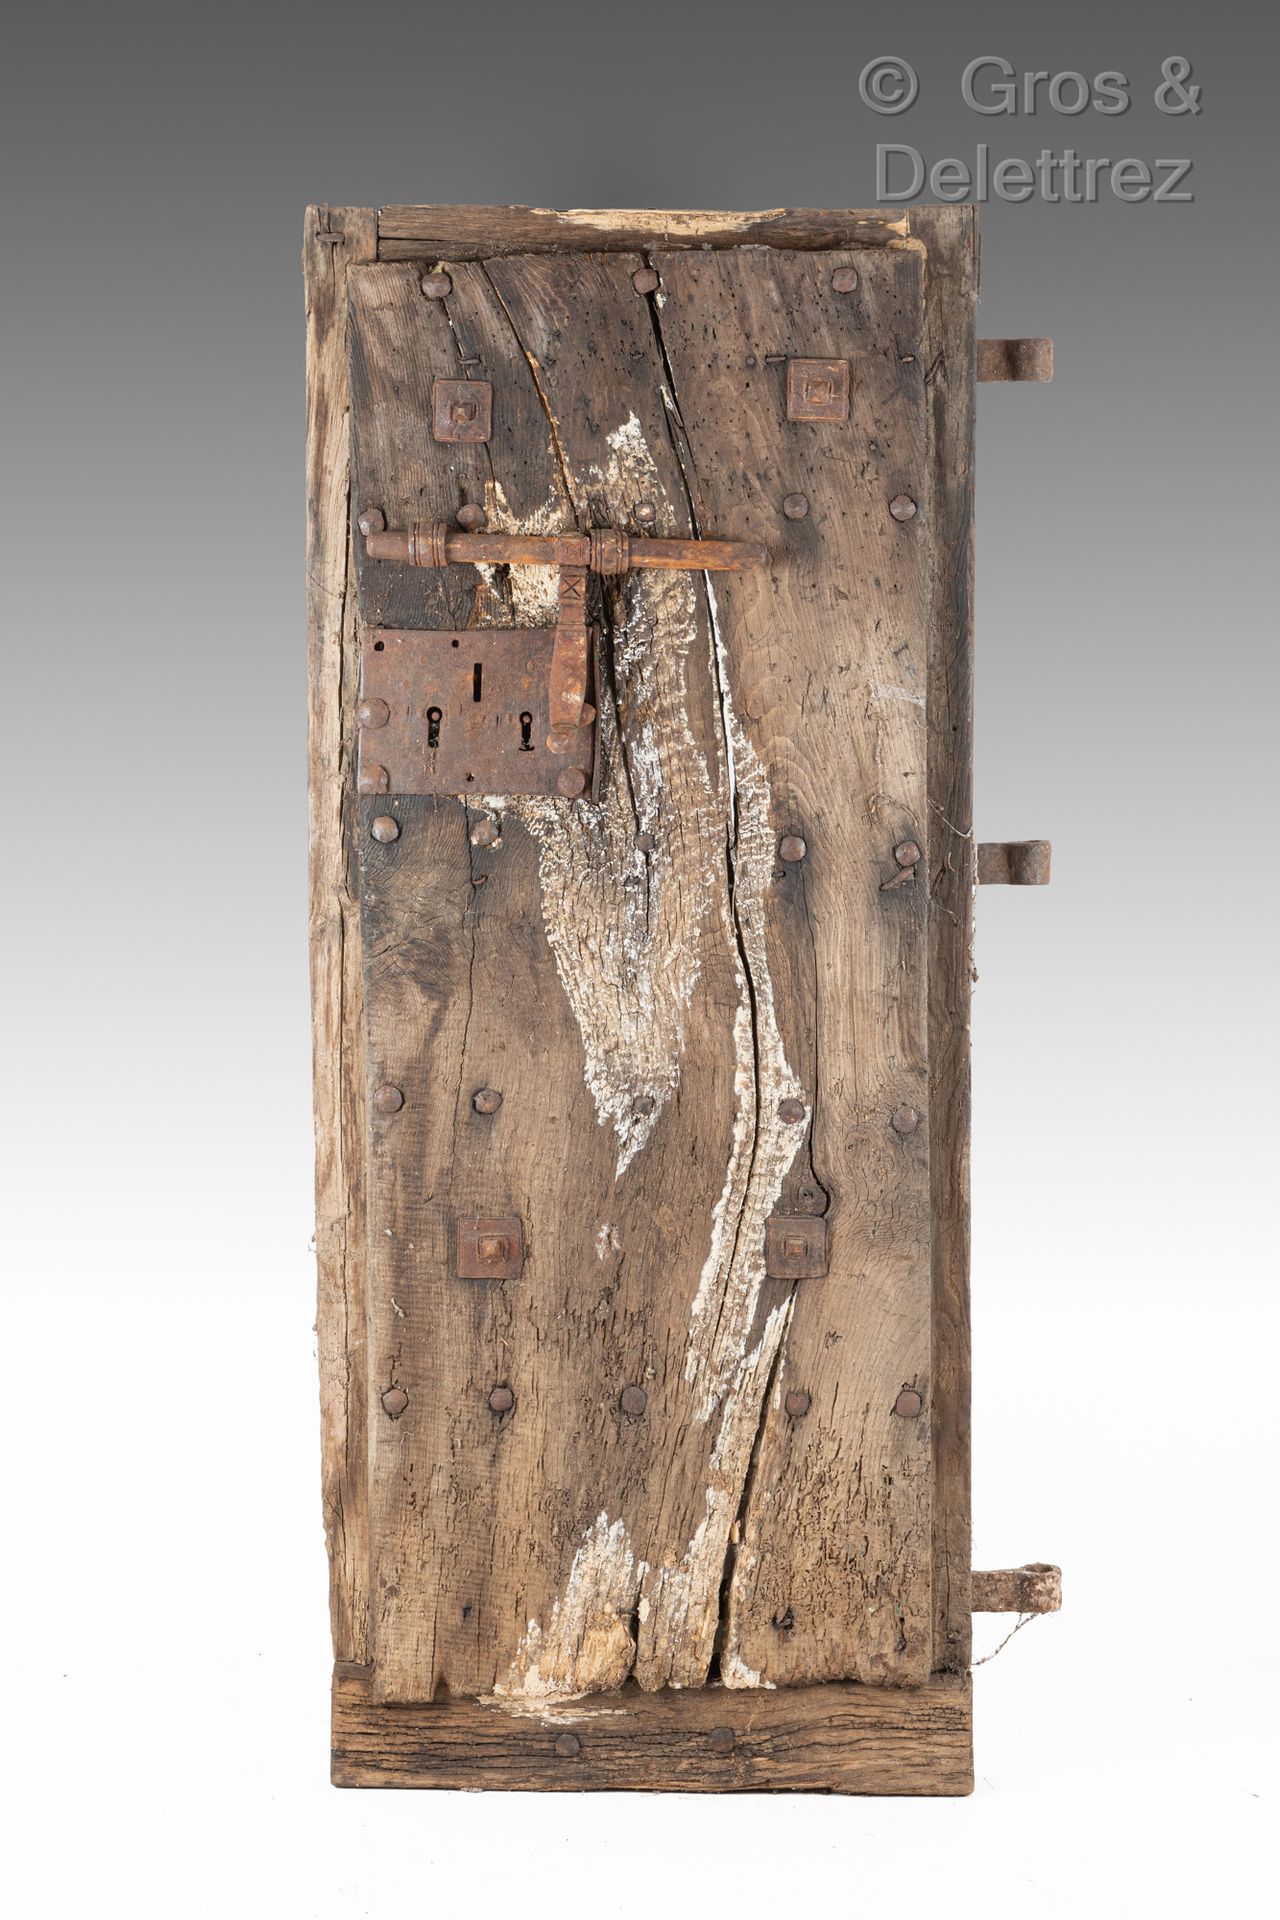 Null 橡木门，门锁上有一个手柄形式的门闩，用锻铁钉子装饰。

西班牙，17/18世纪

高度：170厘米 - 宽度：71厘米

(侵蚀、可见事故)